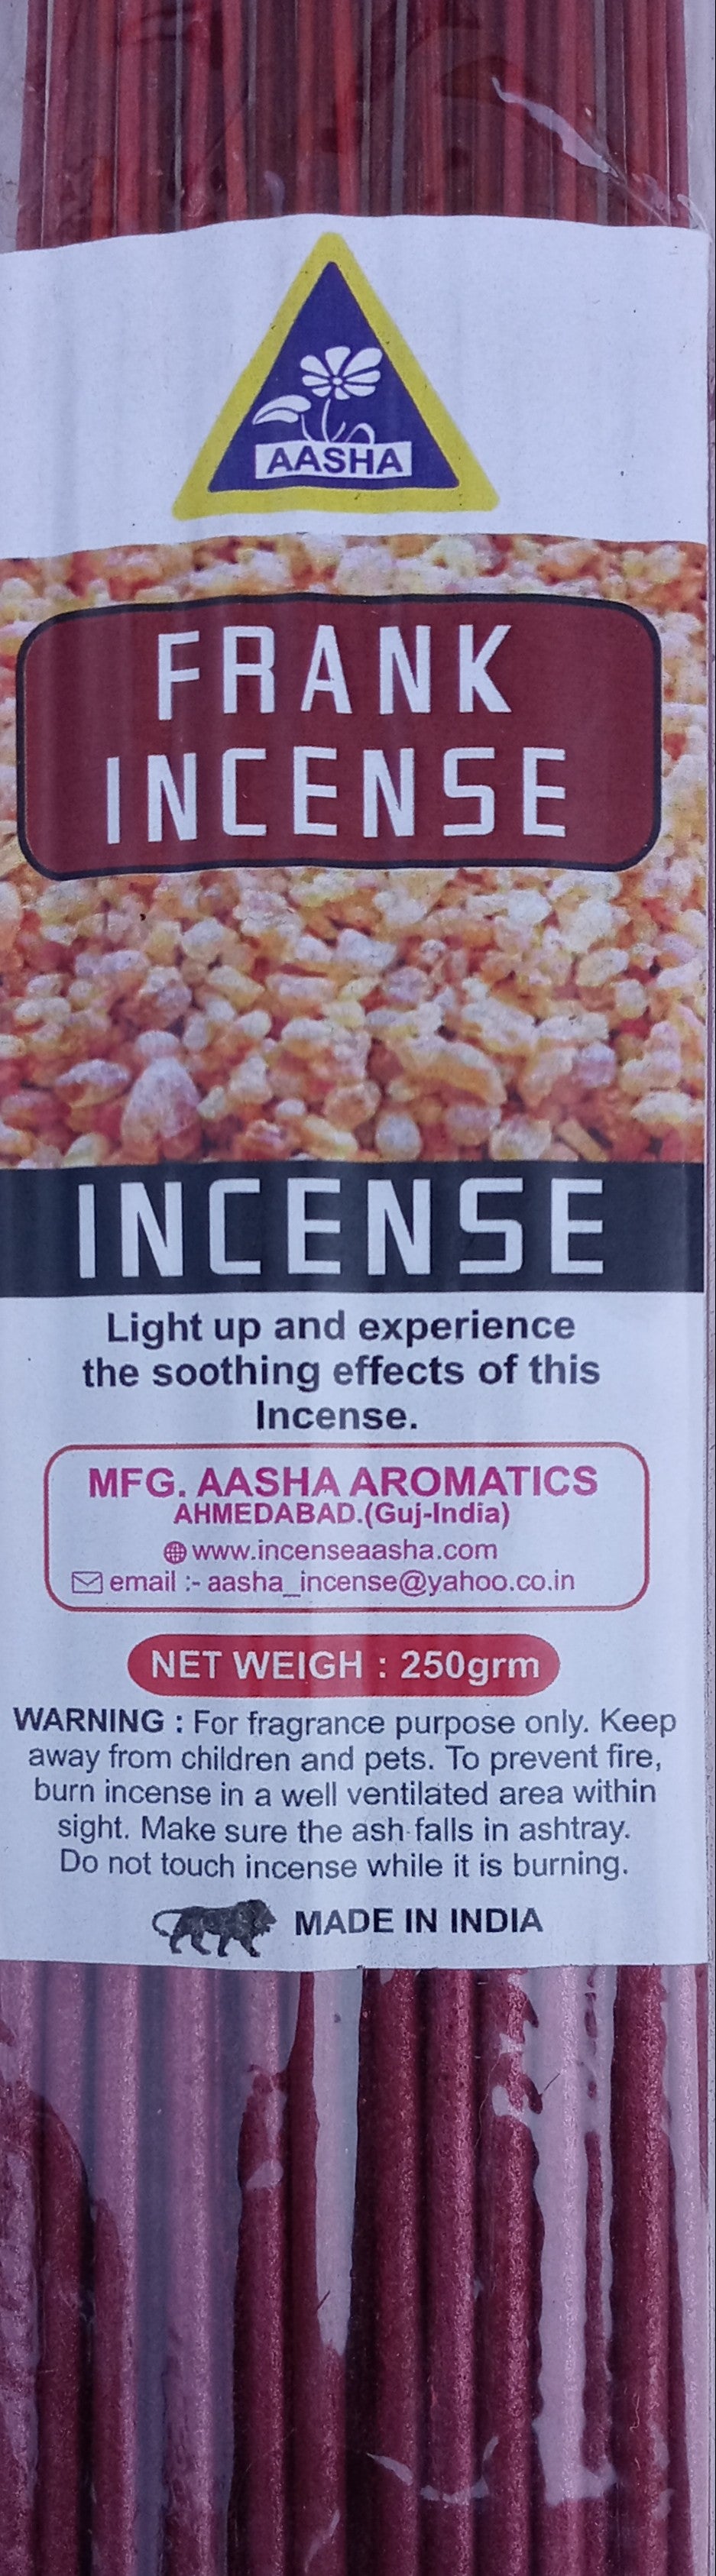 Aasha Frank Incense Jumbo Incense Sticks-16 Inch-40 Sticks